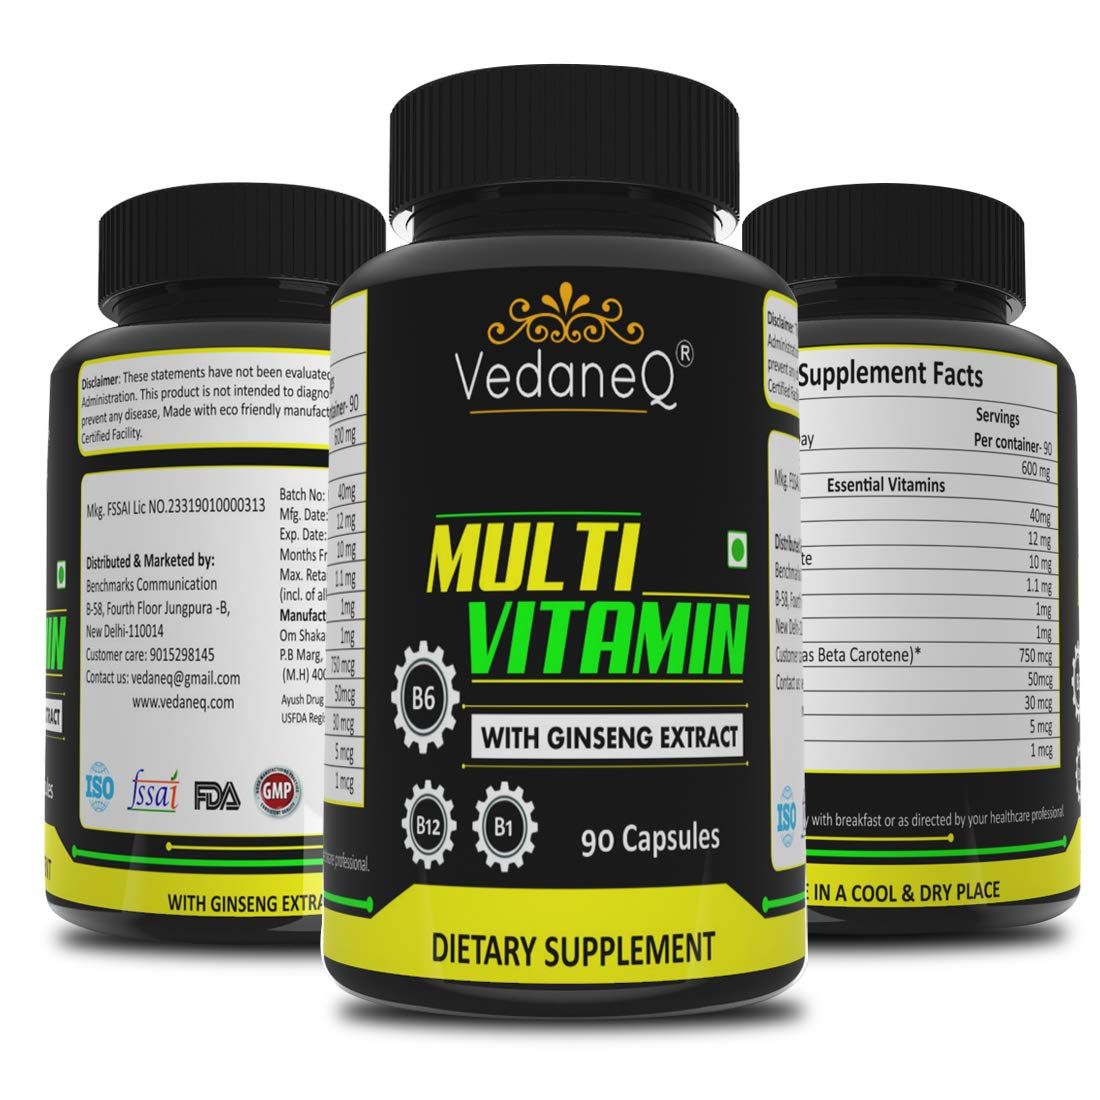 Vedane Q Multivitamins For Men & Women Daily Use Capsules Image